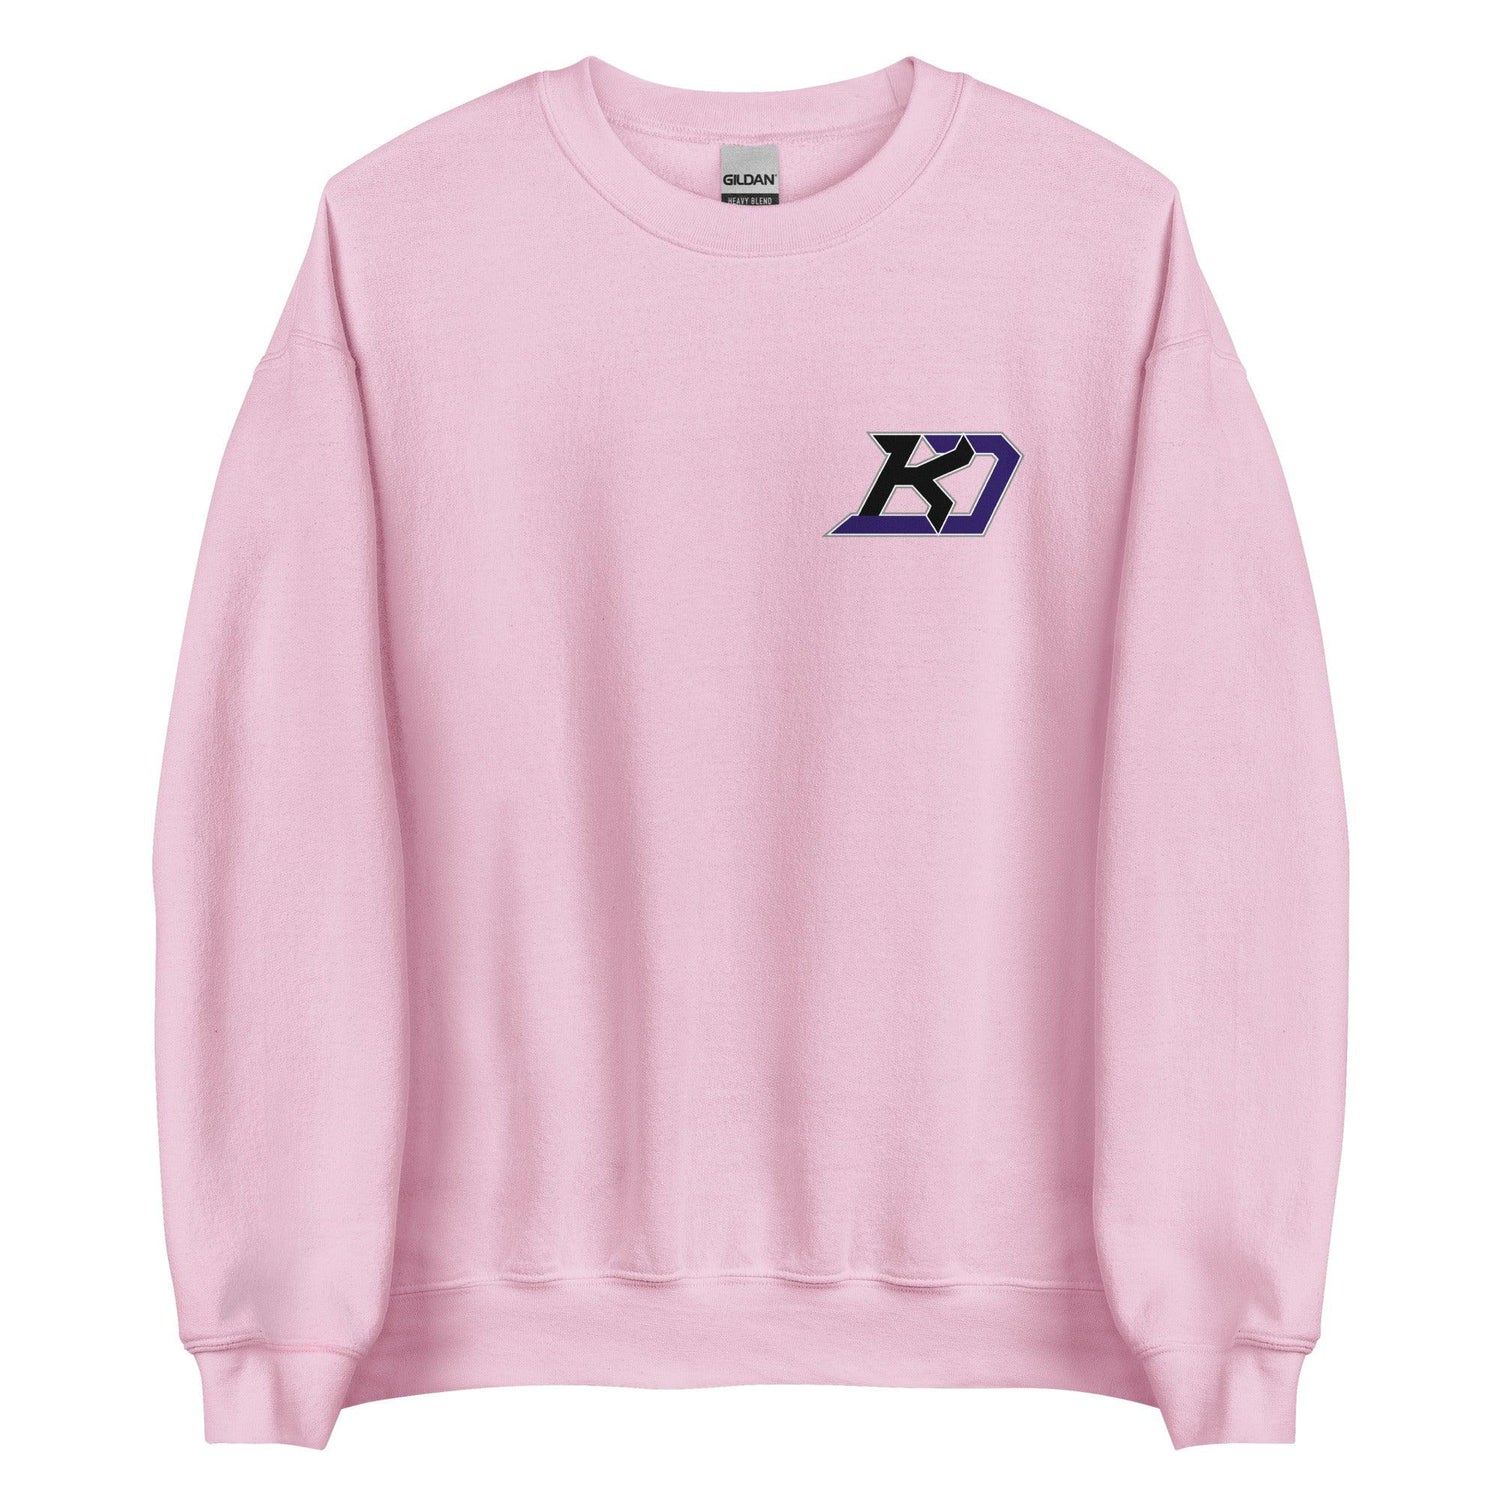 Kyle Datres “Signature” Sweatshirt - Fan Arch